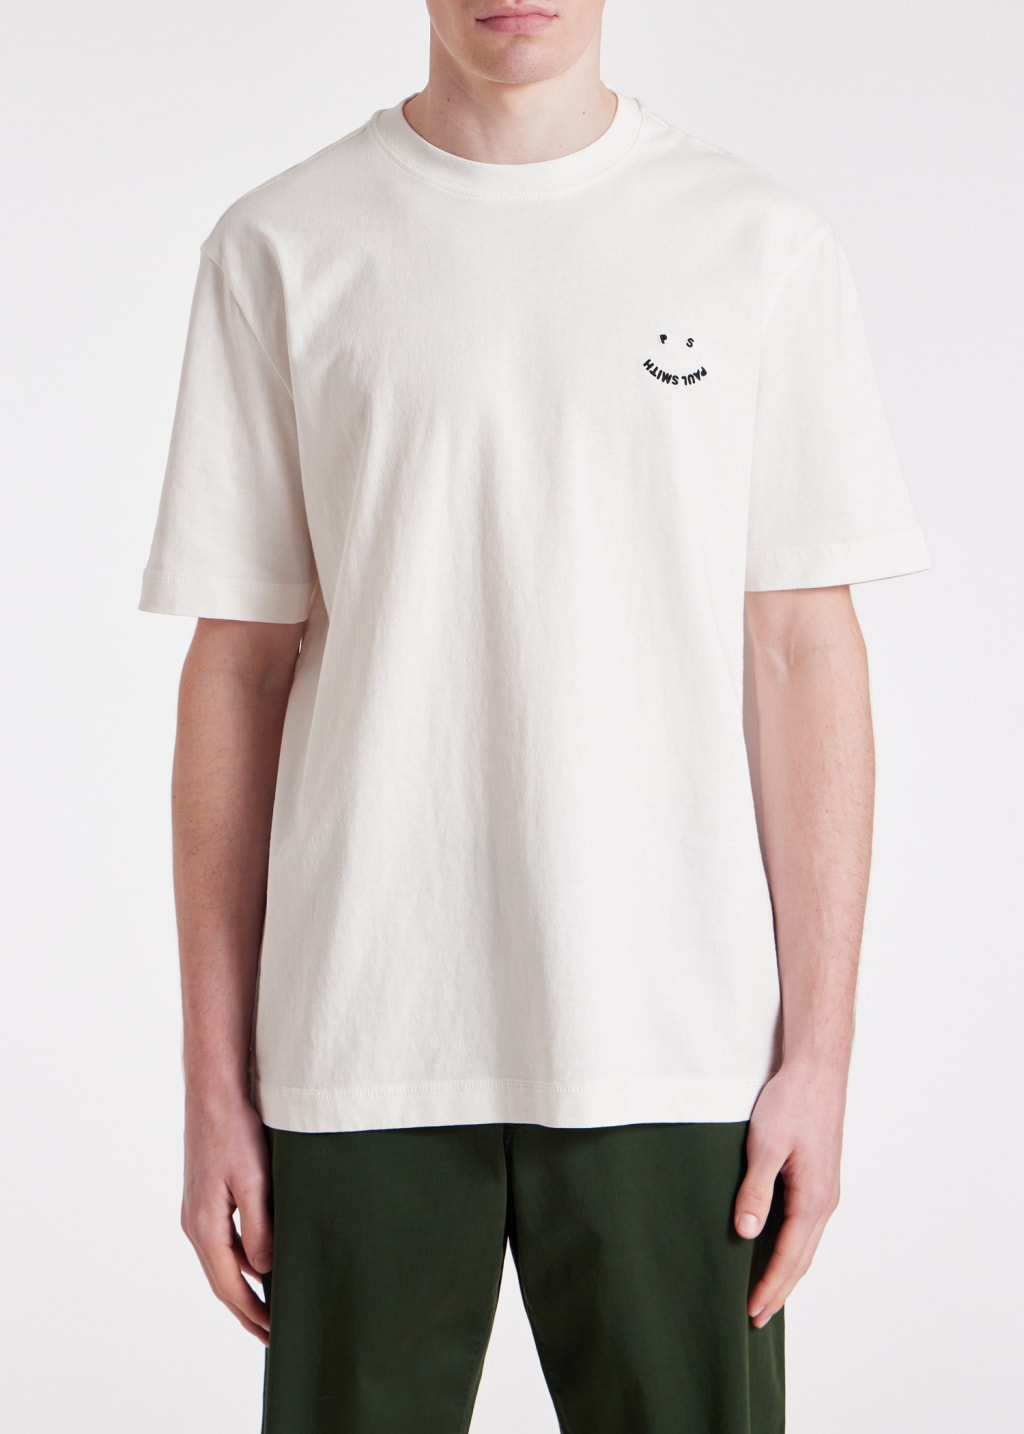 Model View - White Cotton 'Happy' T-Shirt